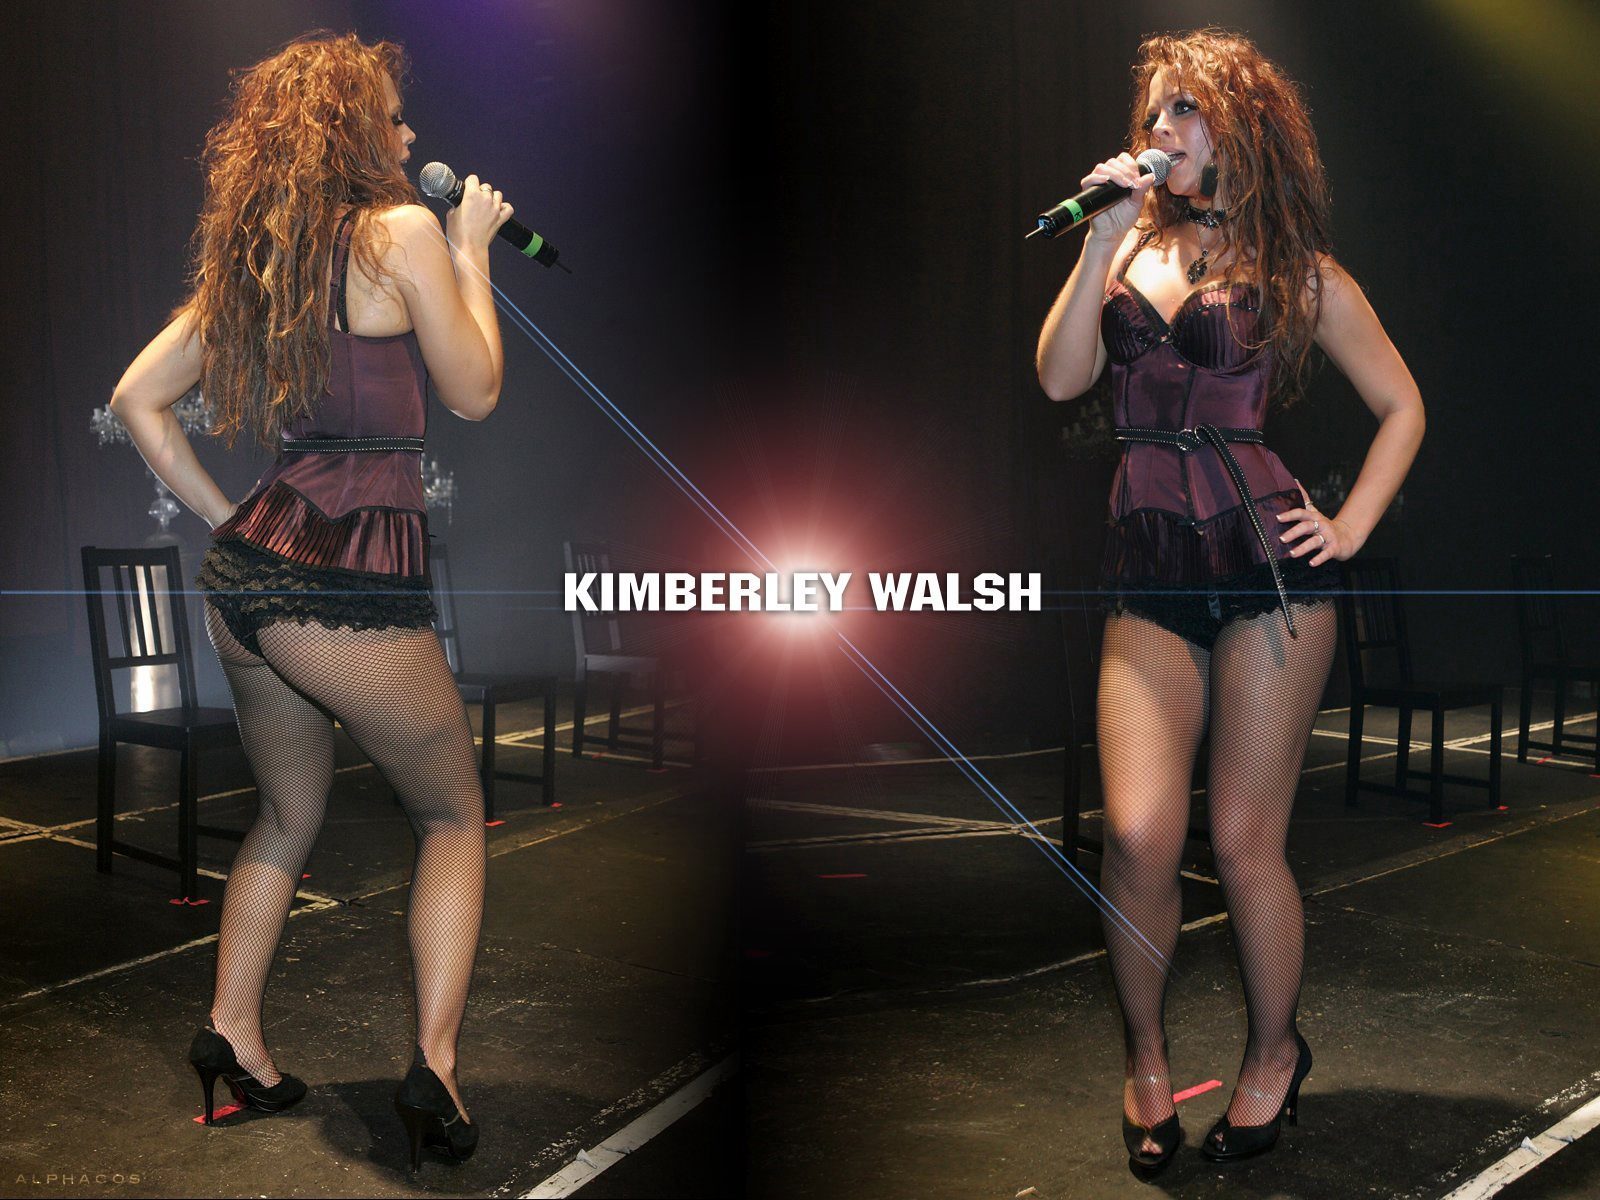 Kimberley walsh hot